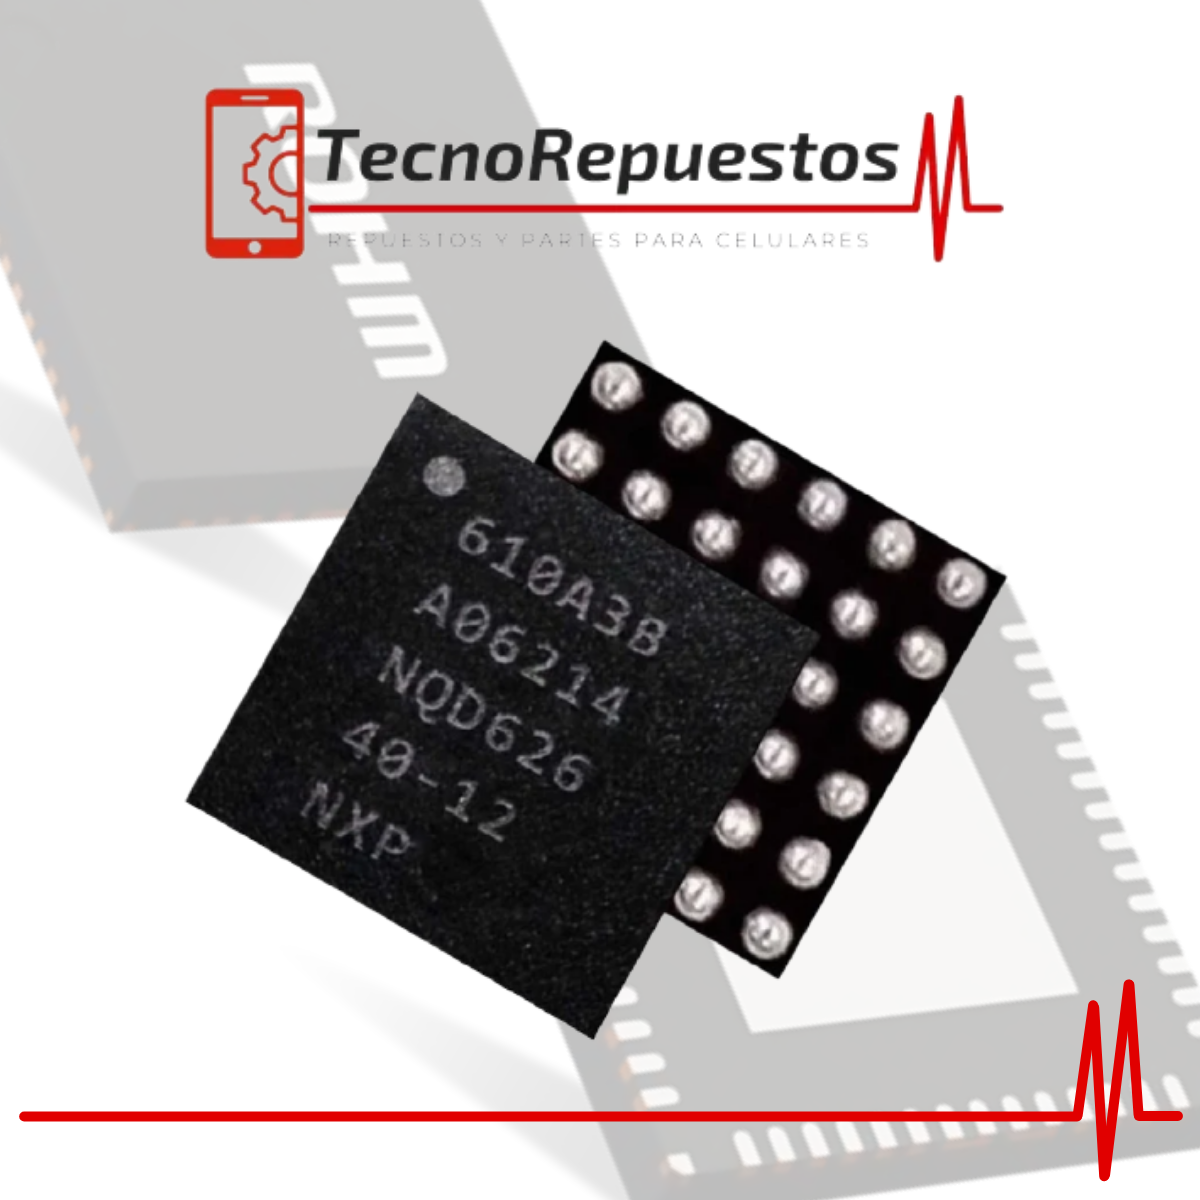 circuitos ic para microelectronica y reparación de celulares guatemala